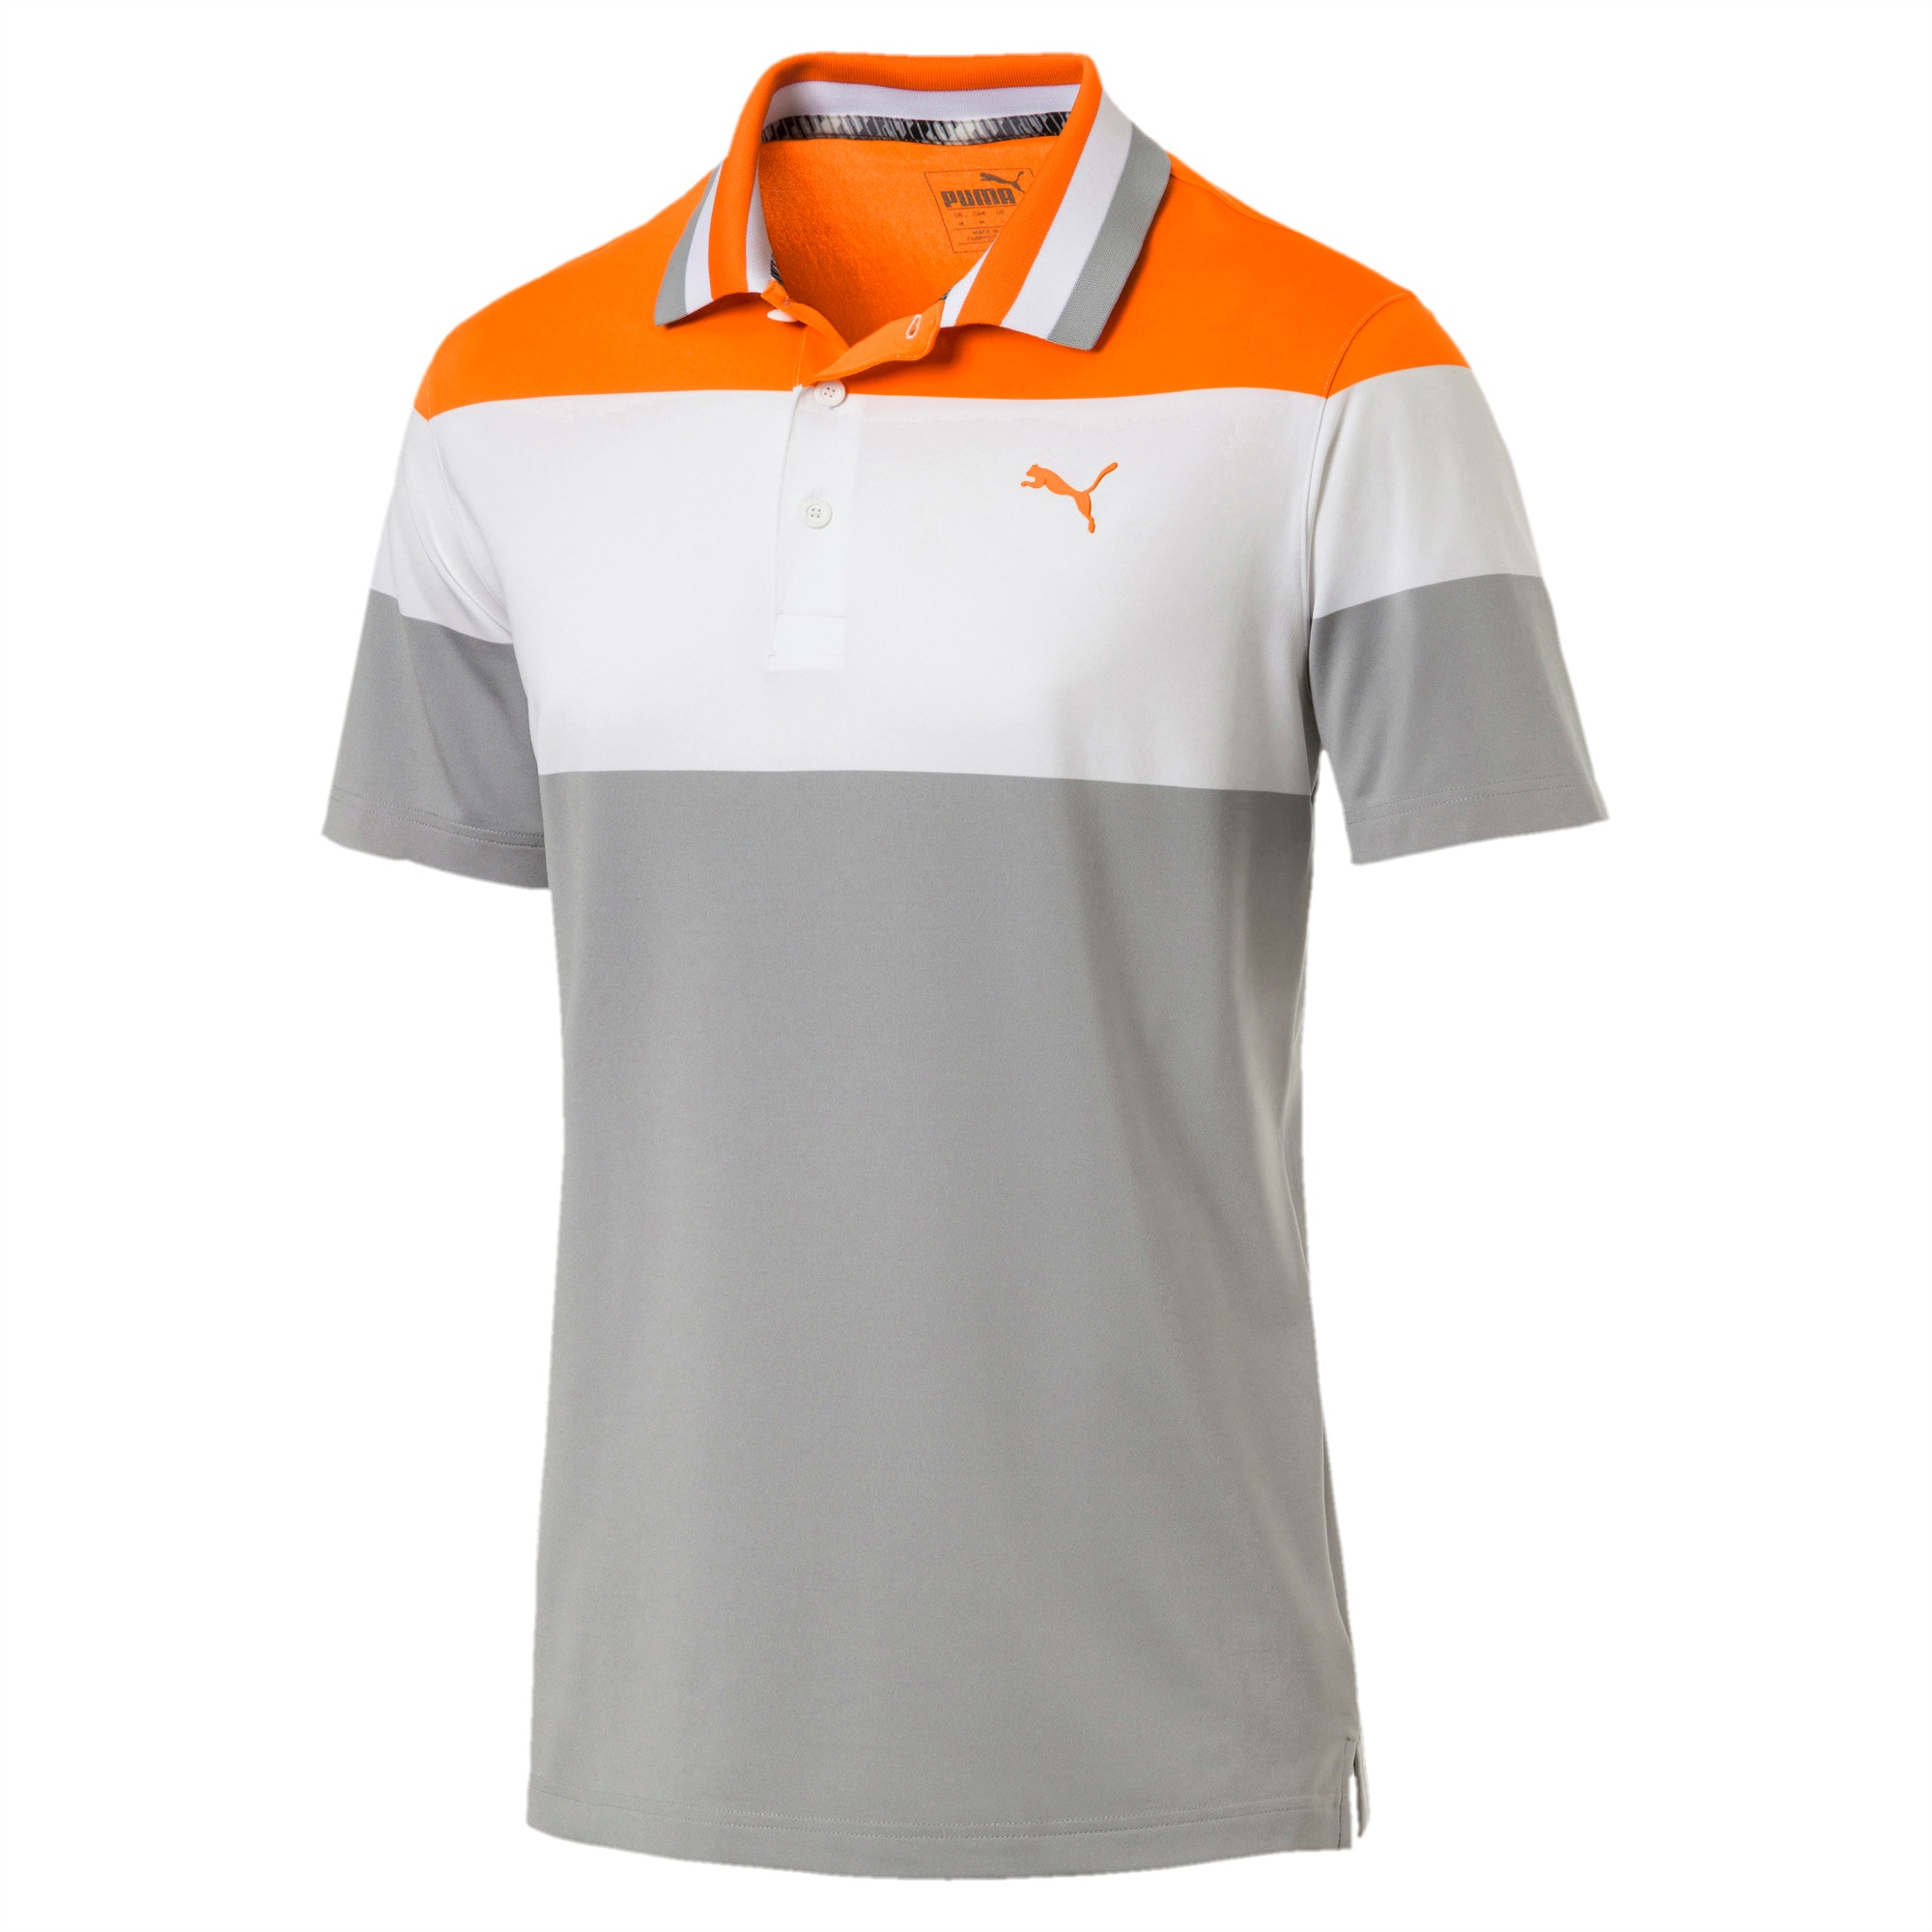 Nineties Men's Golf Polo, Vibrant Orange, large-SEA